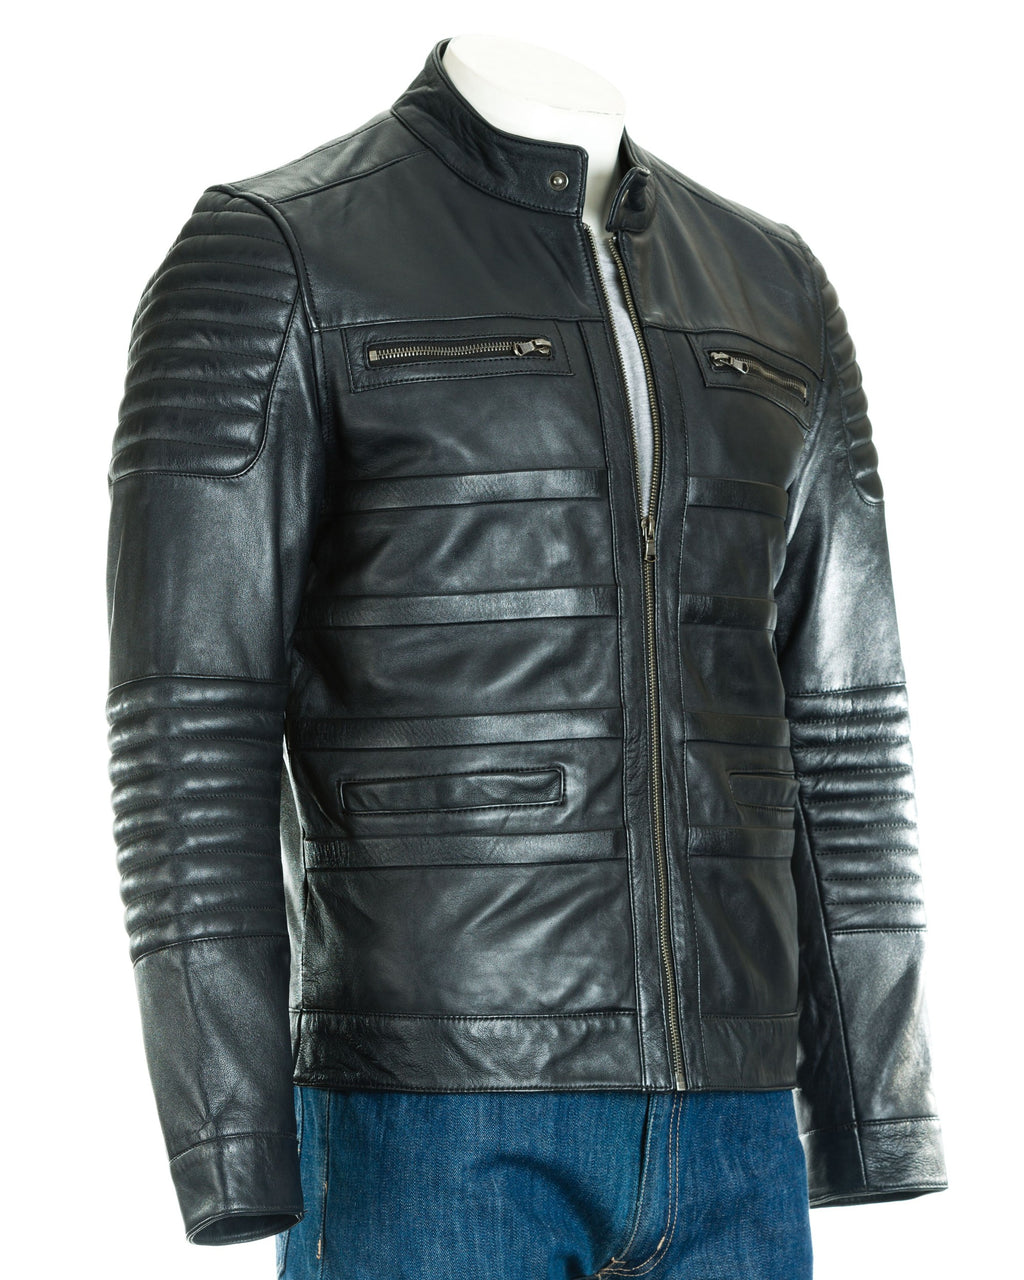 Men's Leather Biker Jacket with Horizontal Banding: Como